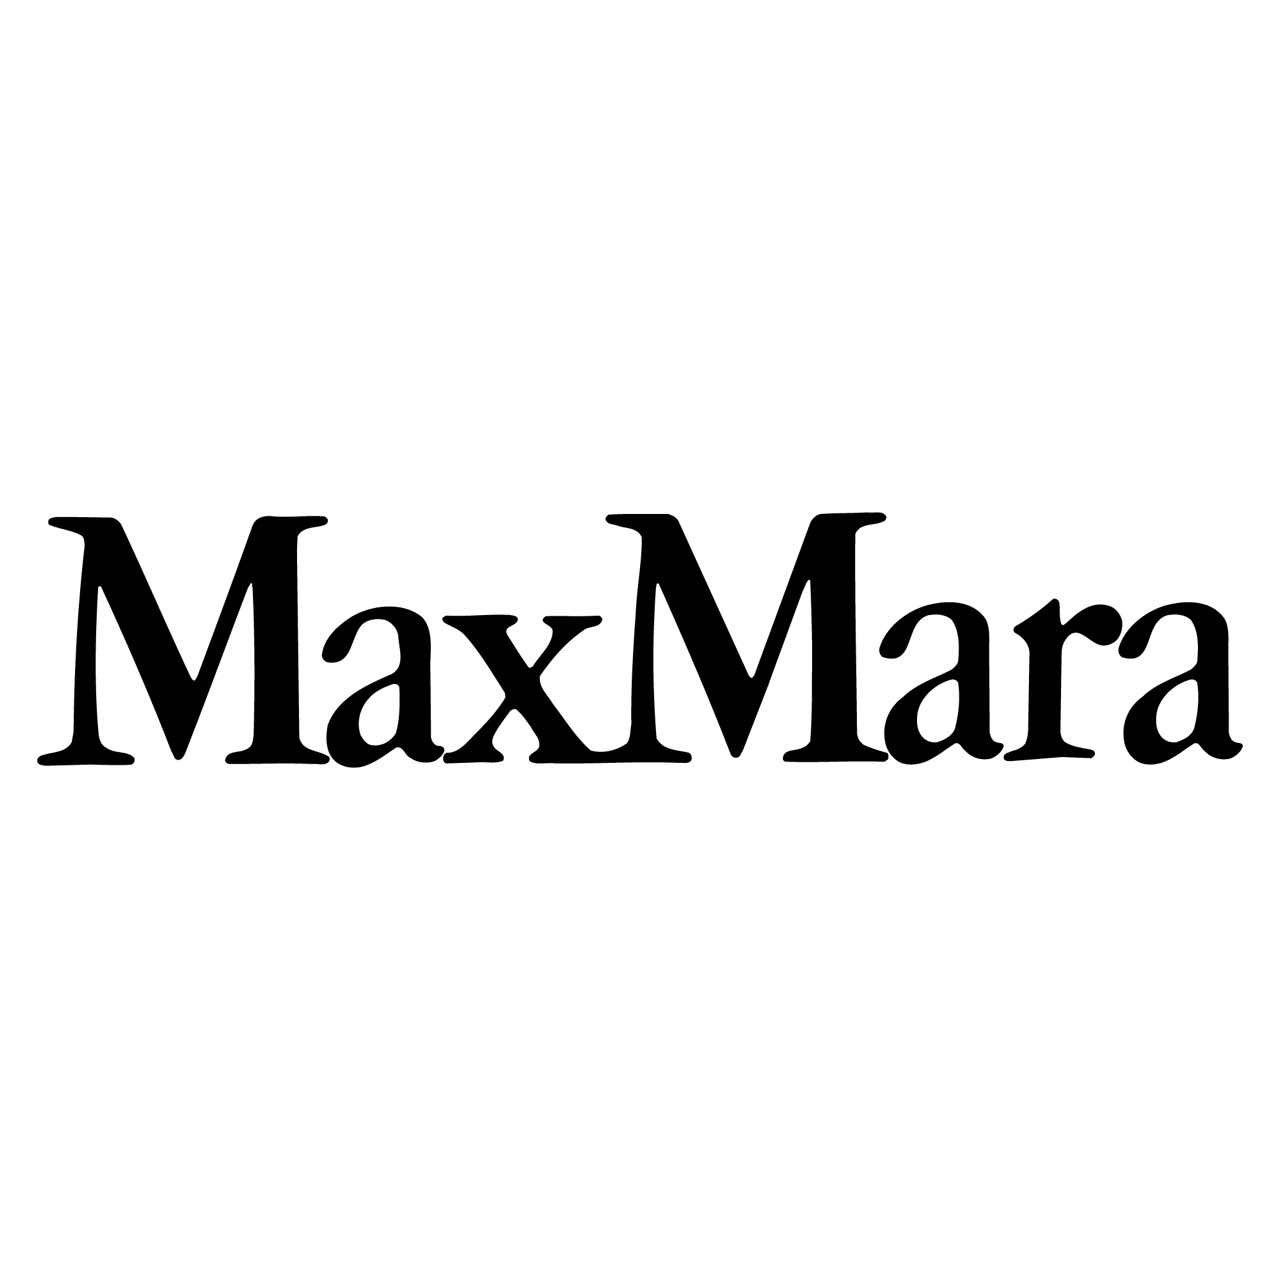 Max Mara in Frankfurt am Main - Logo